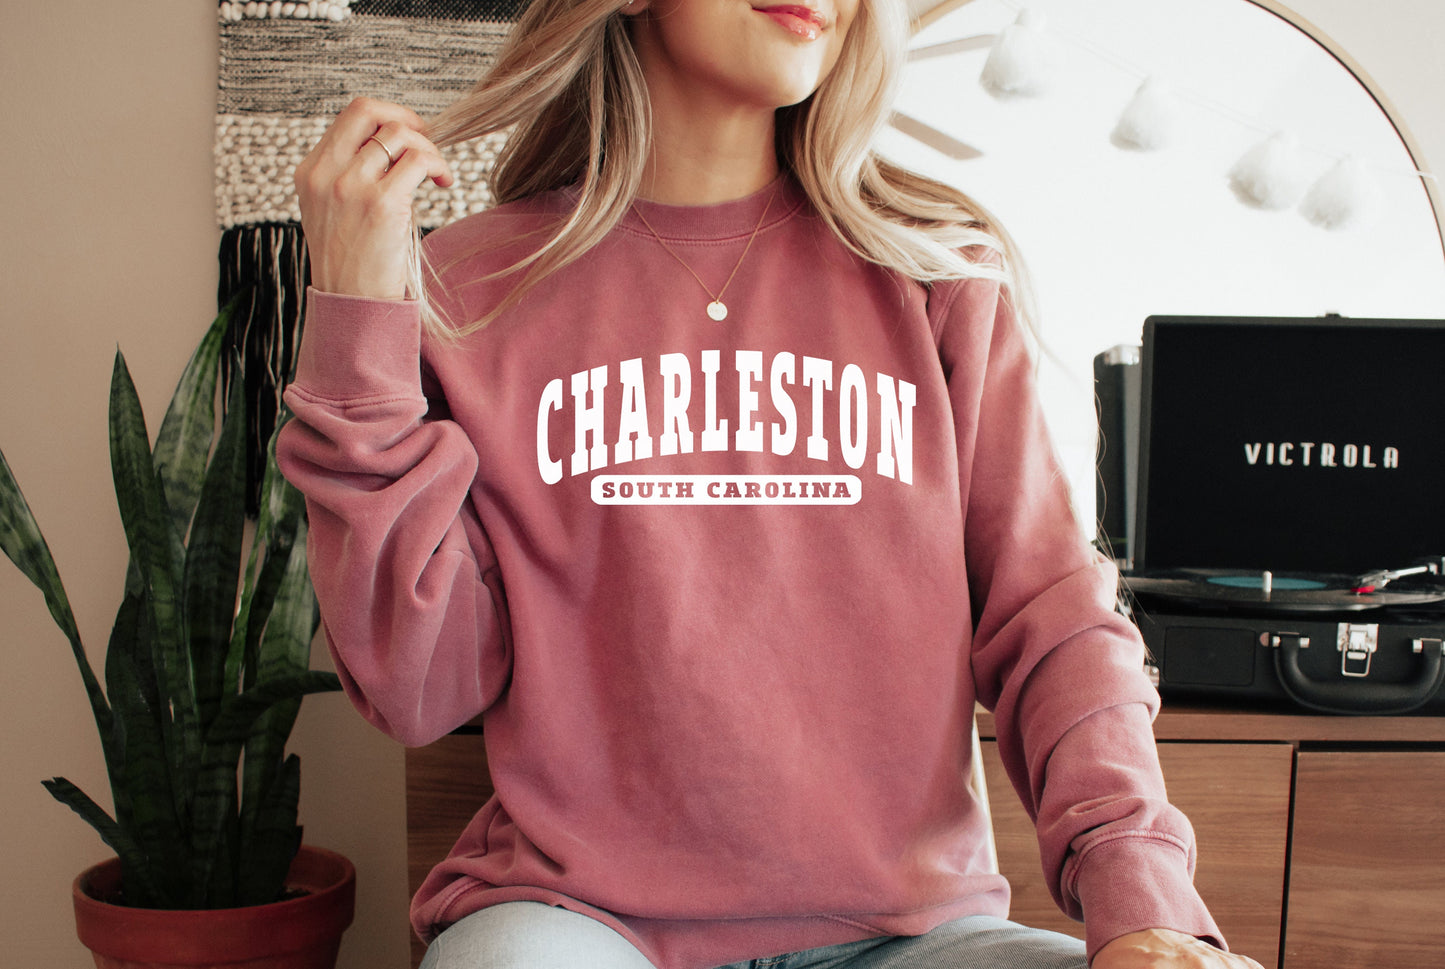 Charleston South Carolina sweatshirt